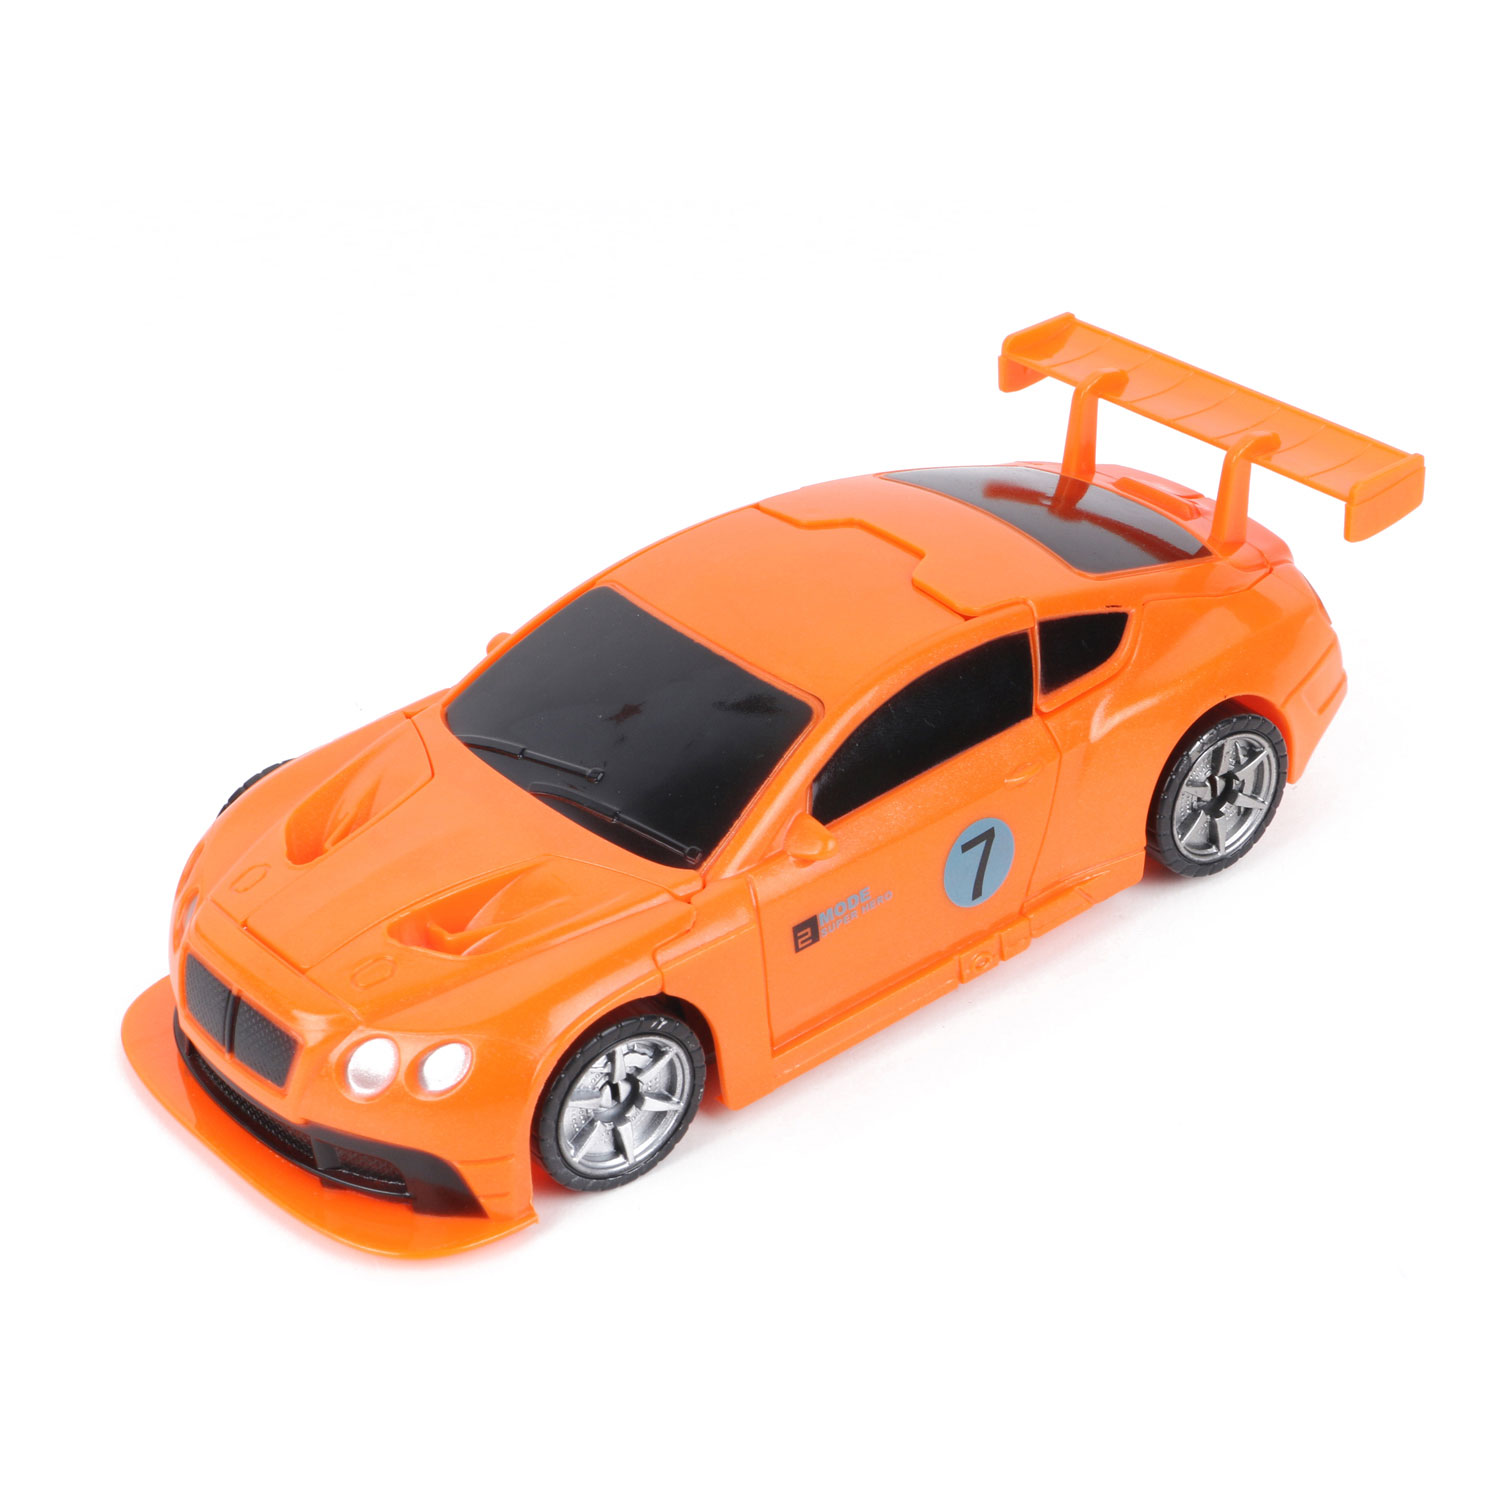 Roboforces Veranderrobot - Auto Oranje